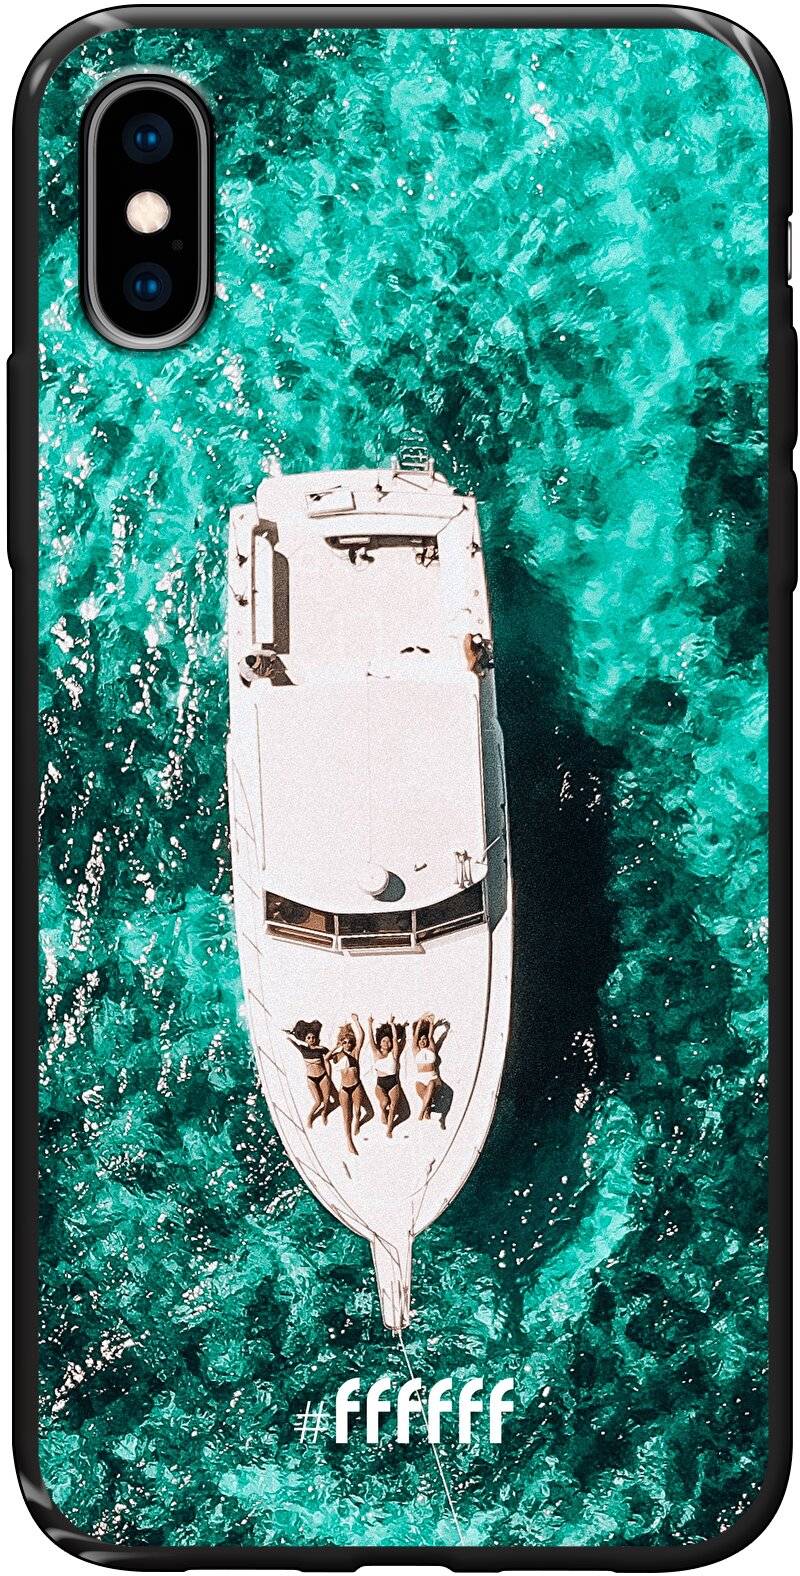 Yacht Life iPhone X